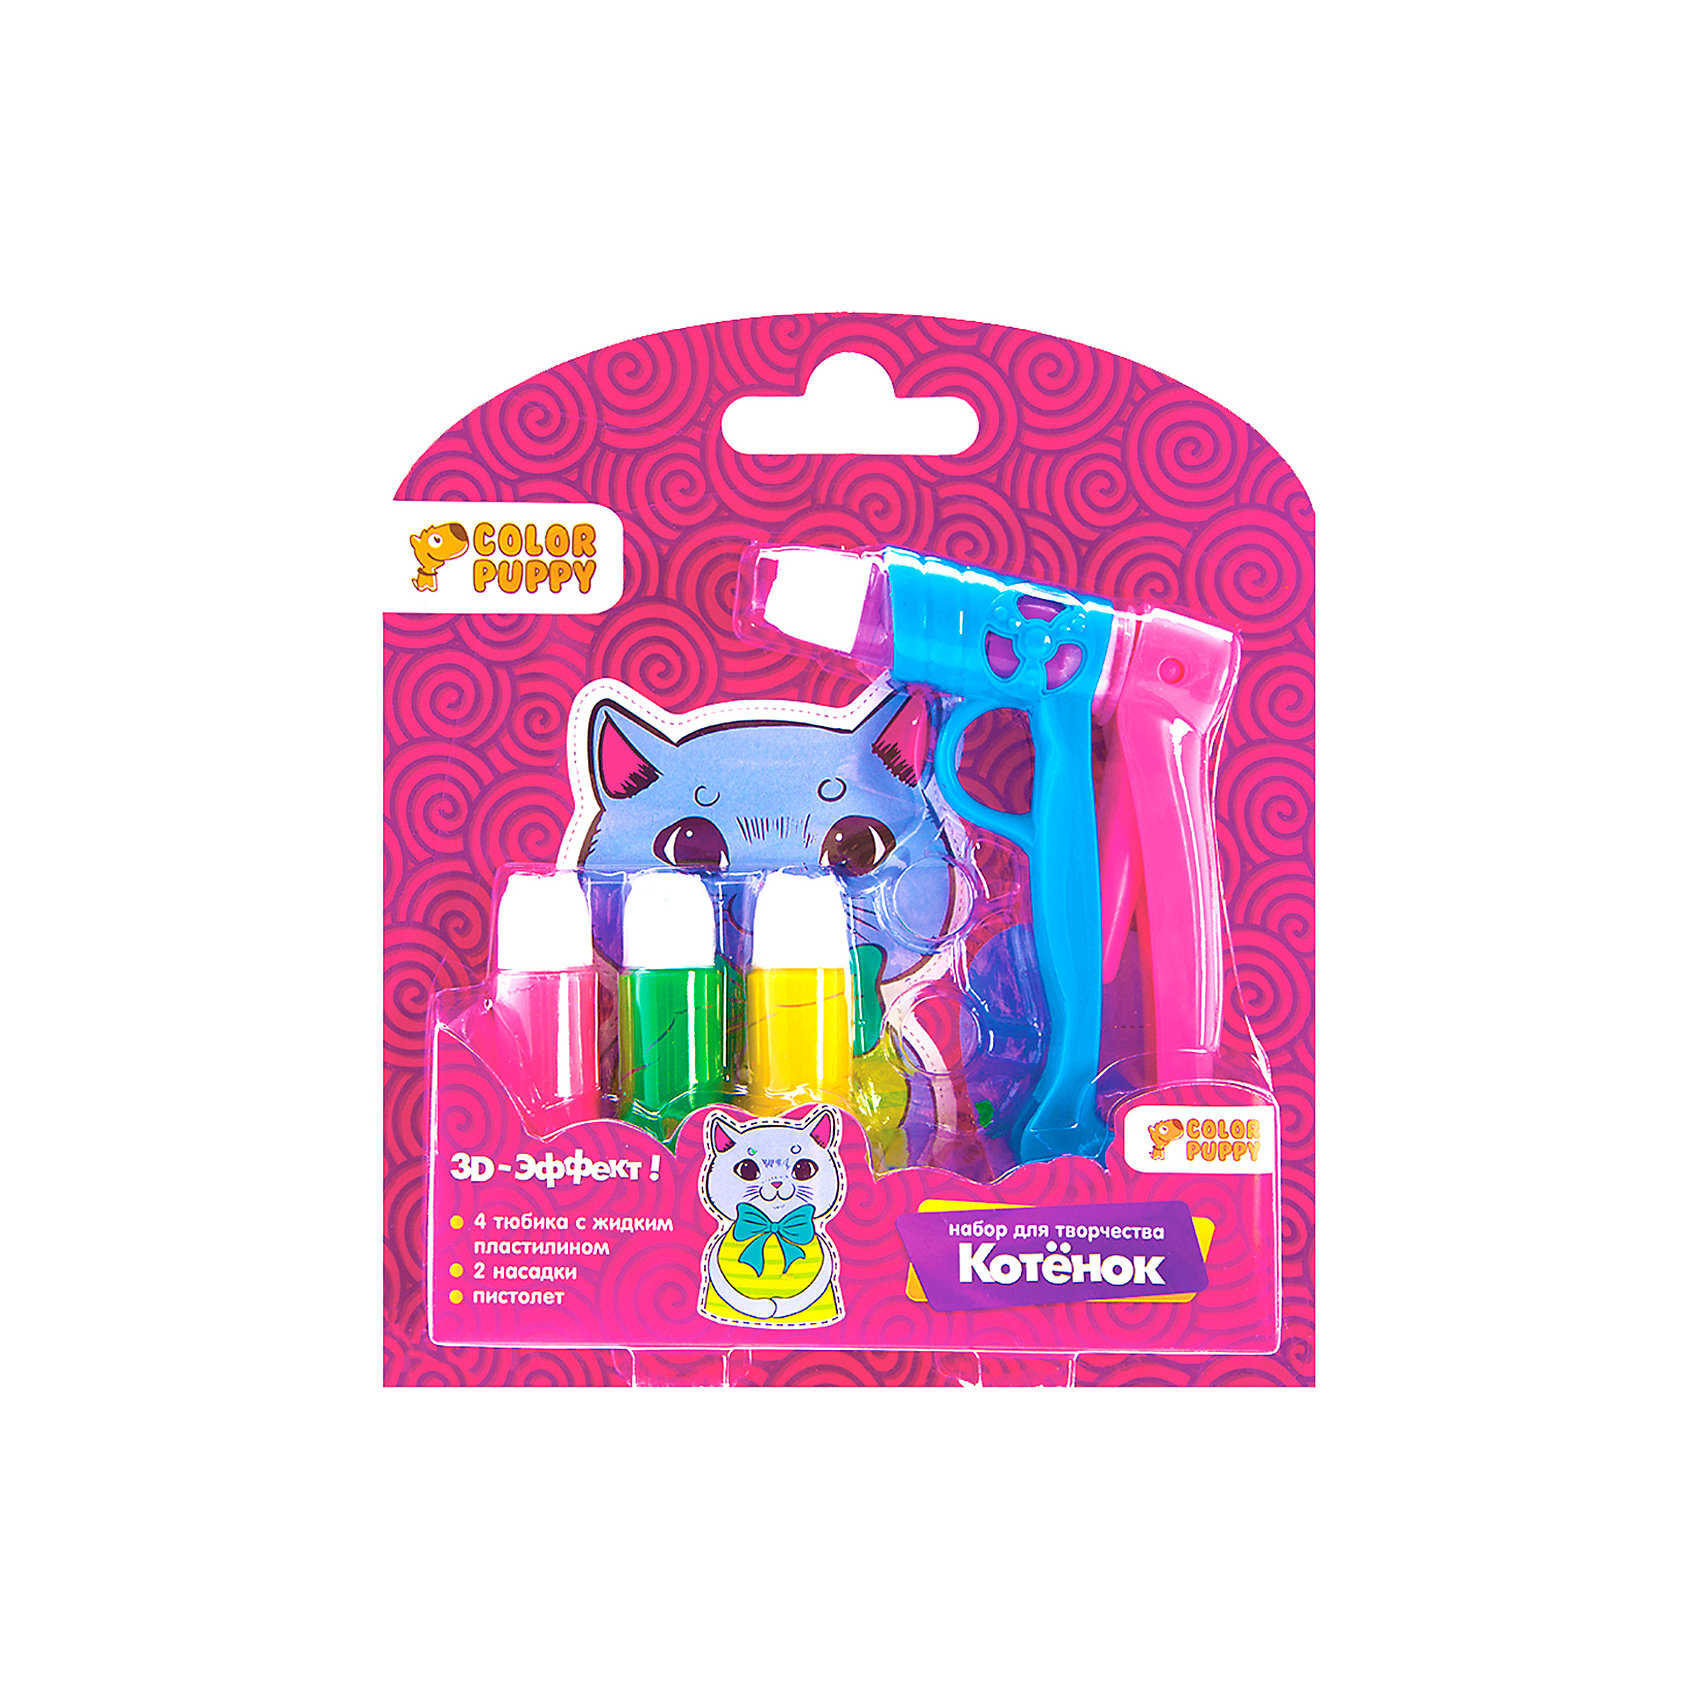 Color Puppy набор для творчества. Пластилин Color Puppy 2 цвета с пистолетом. Лента набор с жидким пластилином.